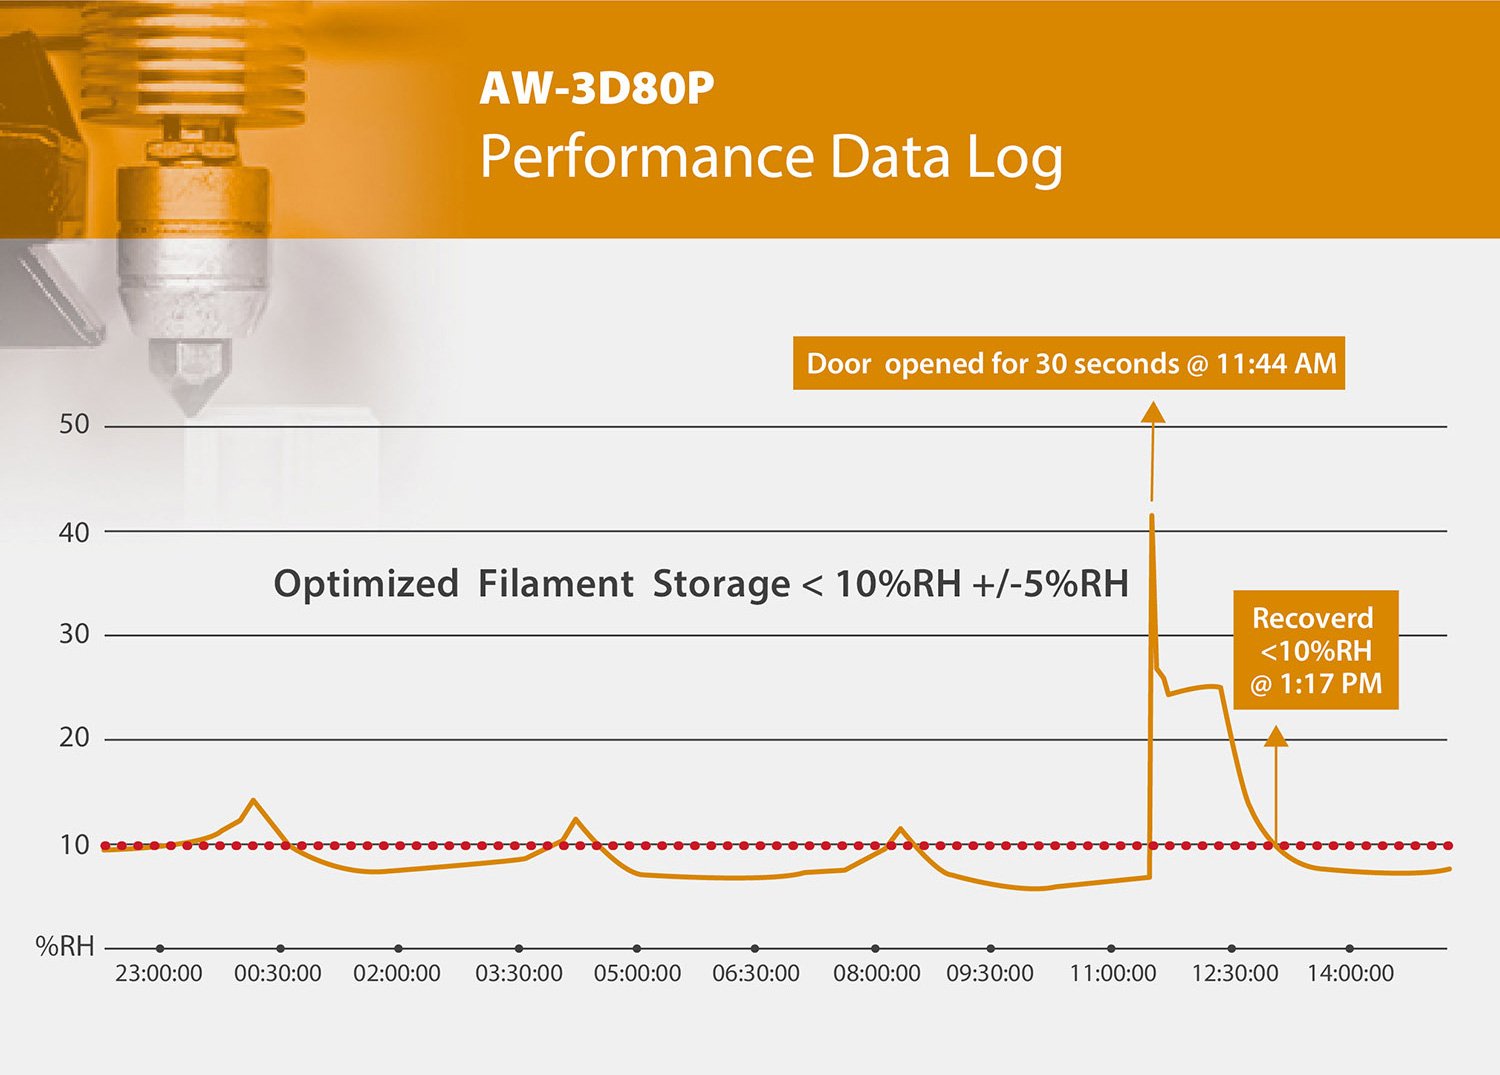 StatPro AW-3D80P Performance Data Log